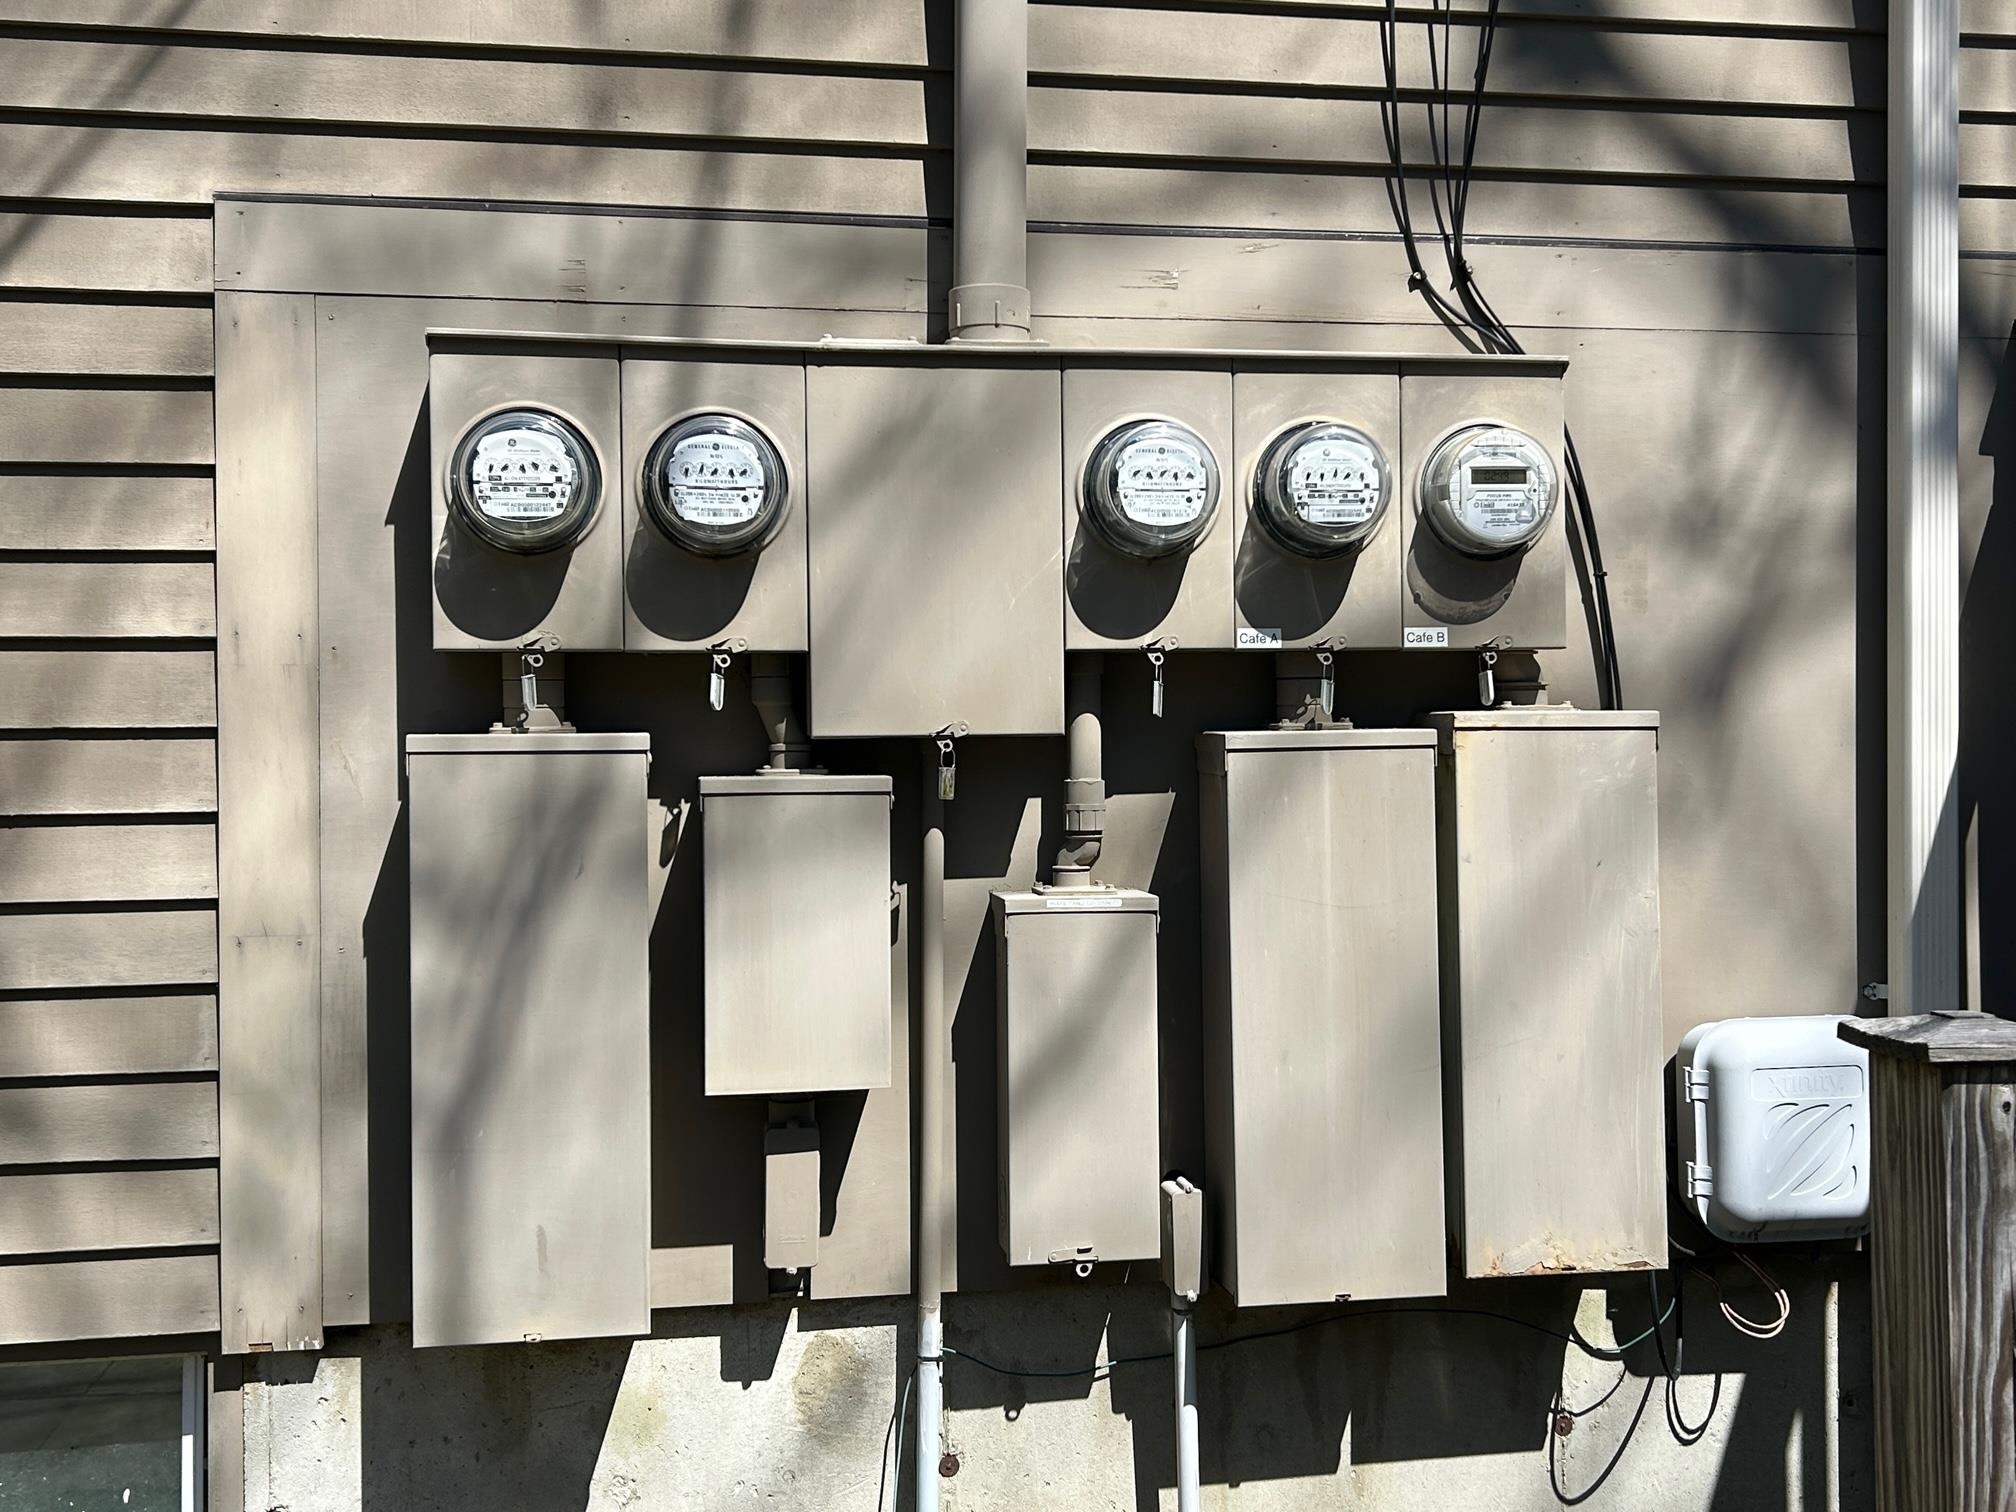 5 individual electric meters